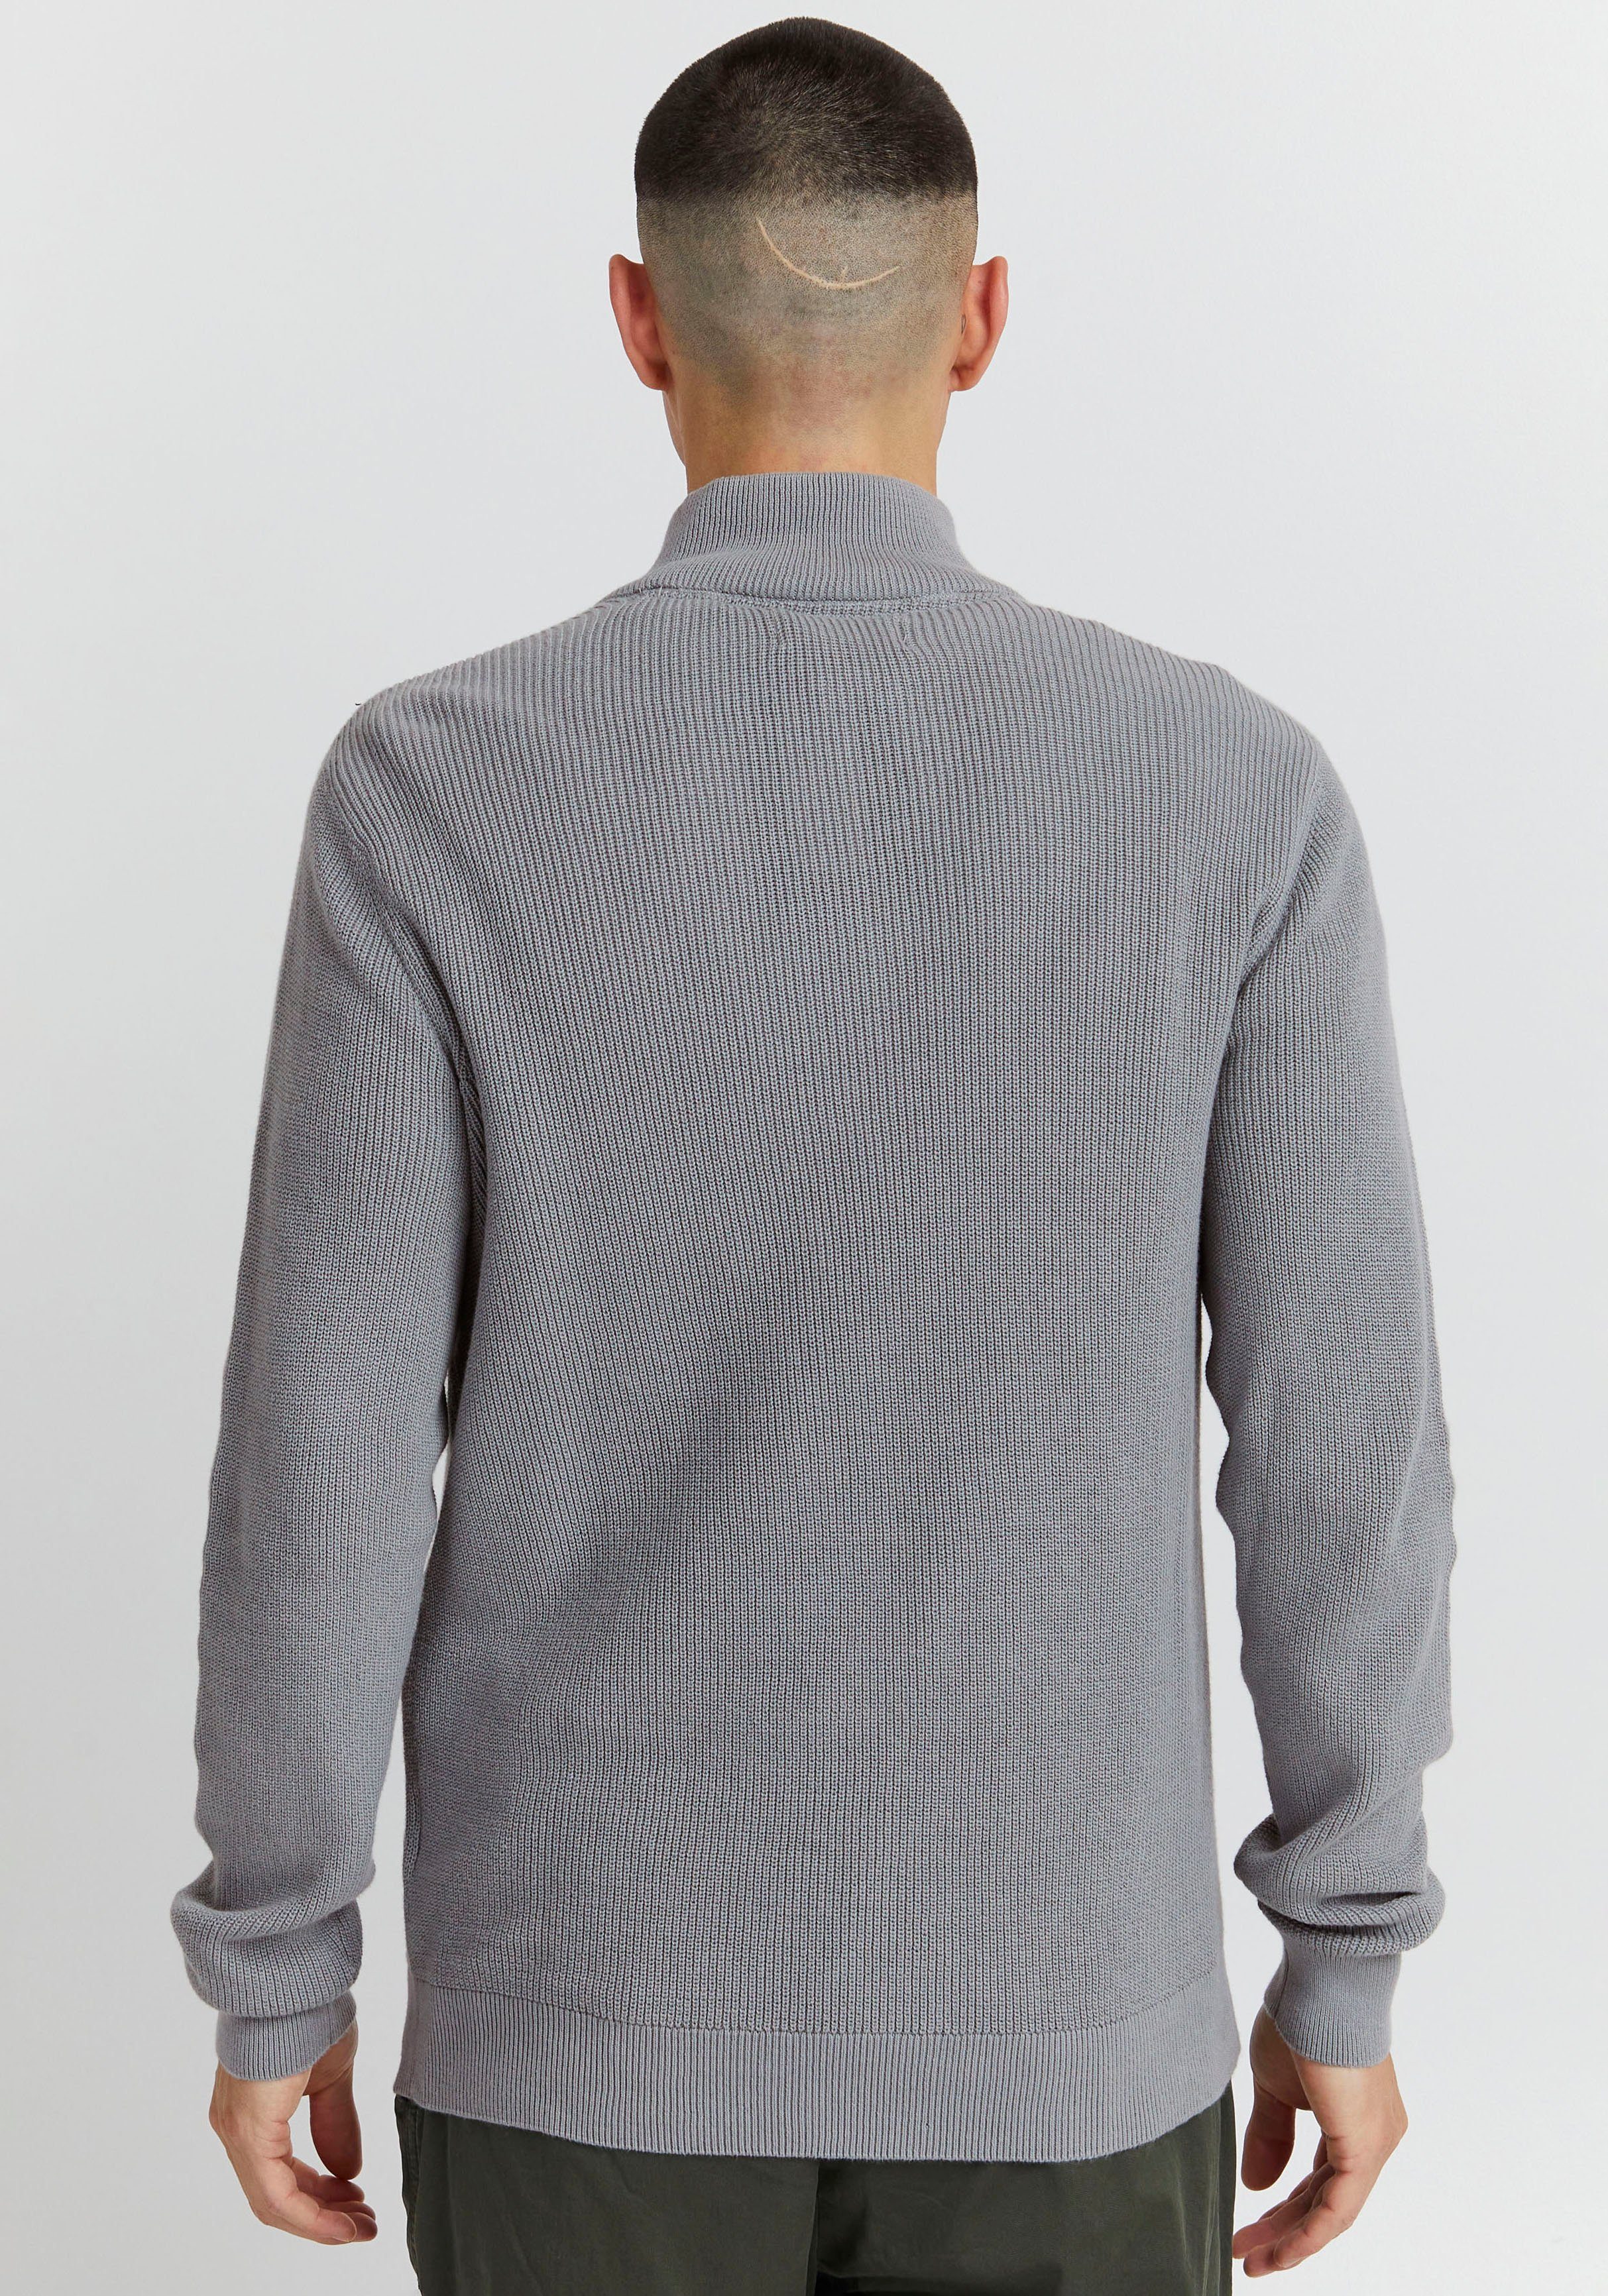 Blend BL half-zipp grau BHCodford Stehkragenpullover Pullover